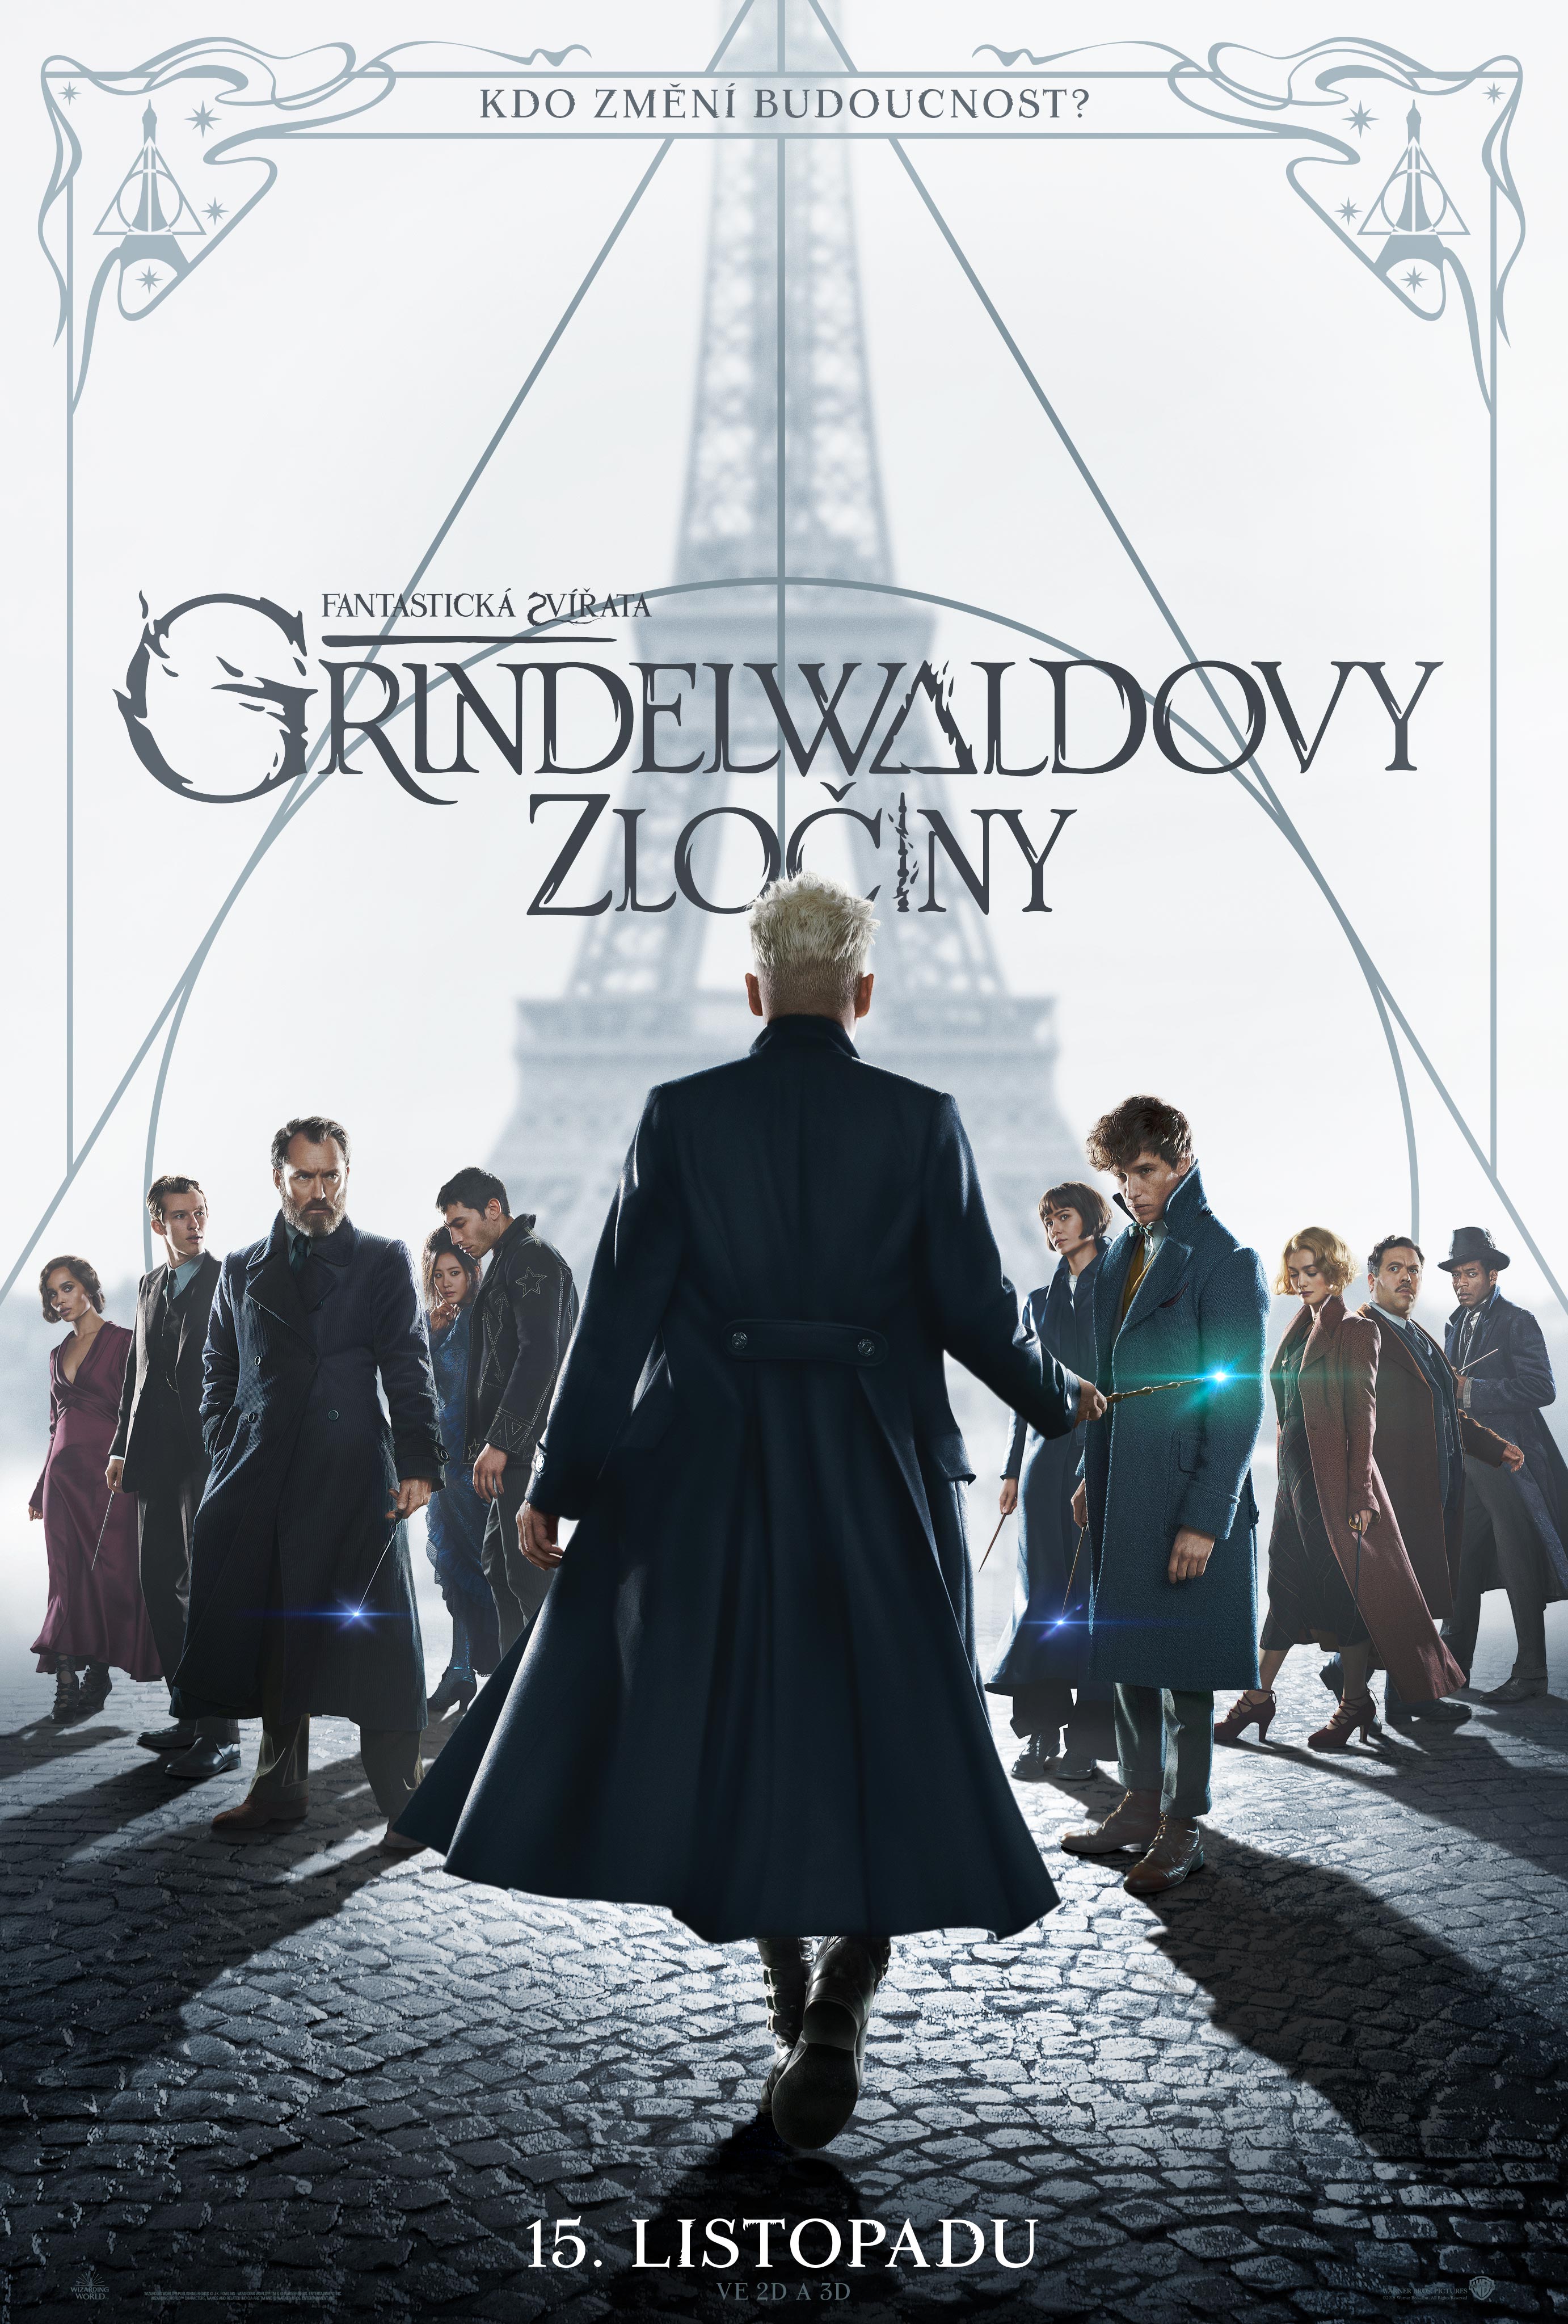 Stiahni si Filmy CZ/SK dabing Fantasticka zvirata: Grindelwaldovy zlociny / Fantastic Beasts: The Crimes of Grindelwald (2018)[EXTENDED](CZ) = CSFD 66%